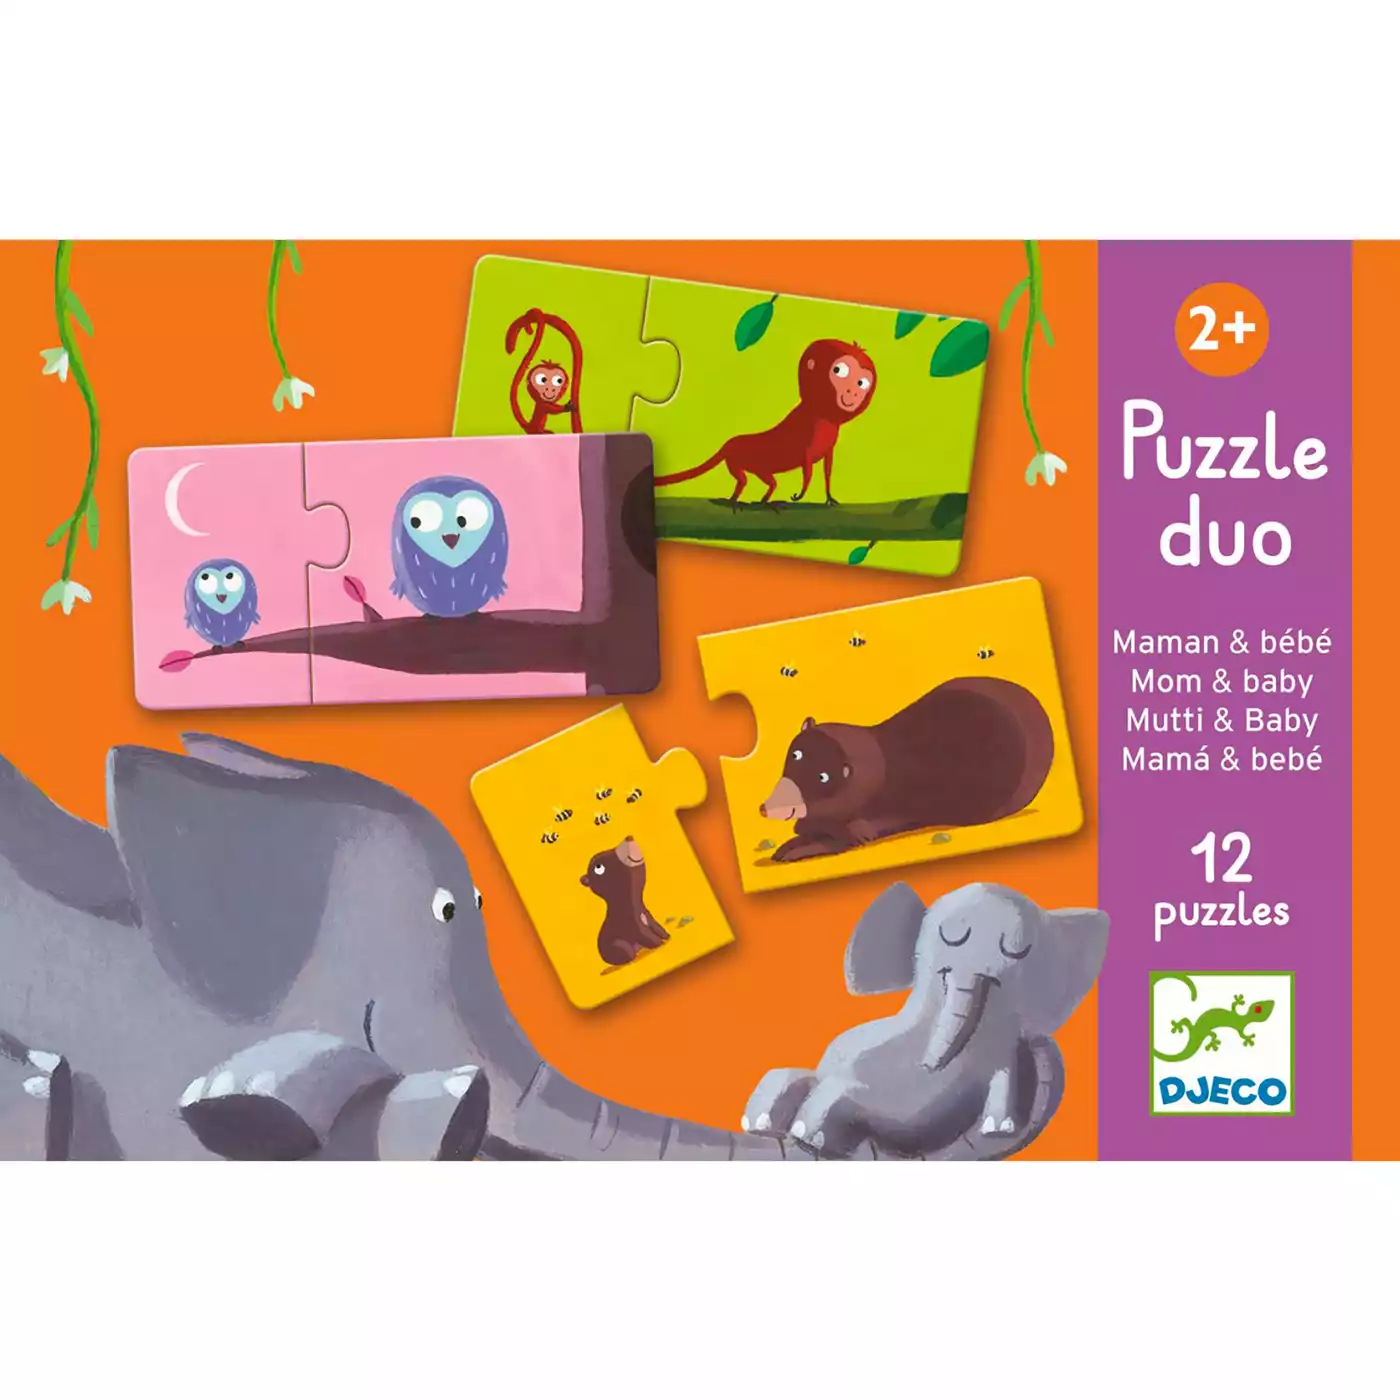 Duo Puzzle -  Mami & Kind DJECO 2000559309607 4